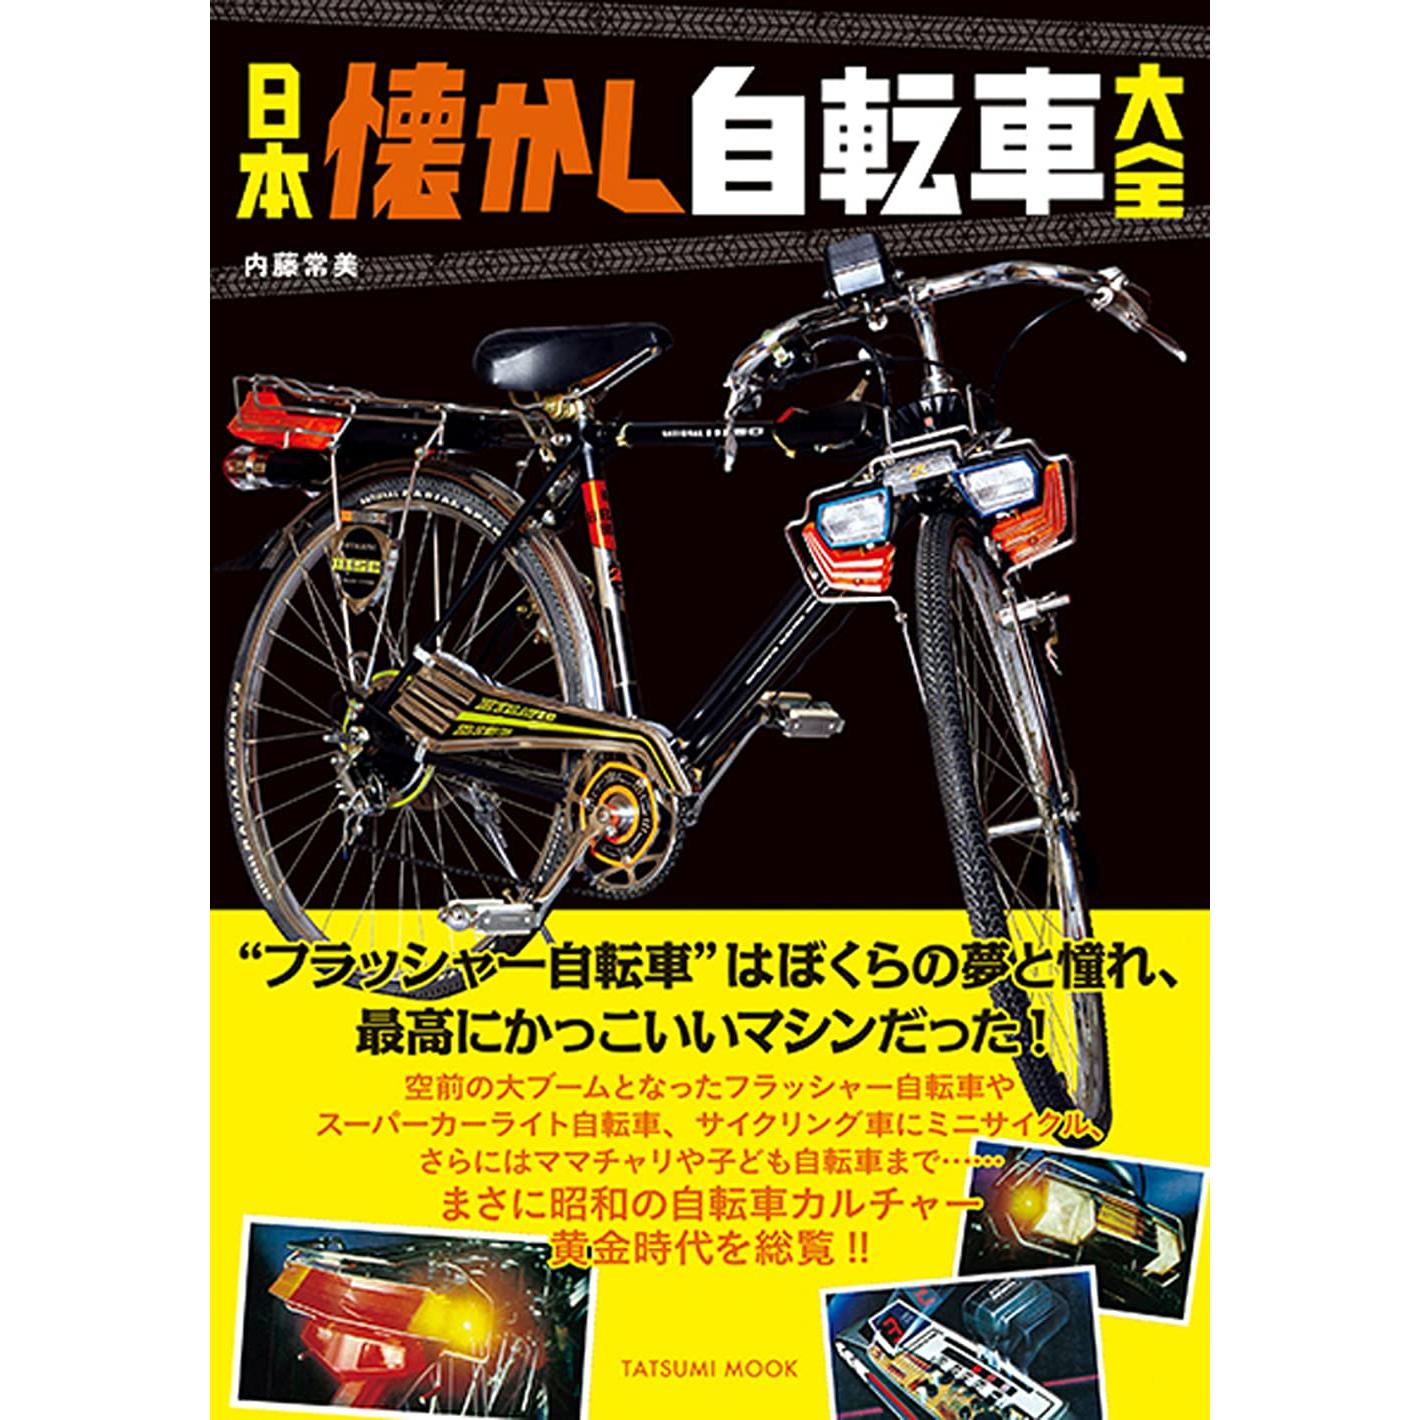 Japanese classic bicycle catalog